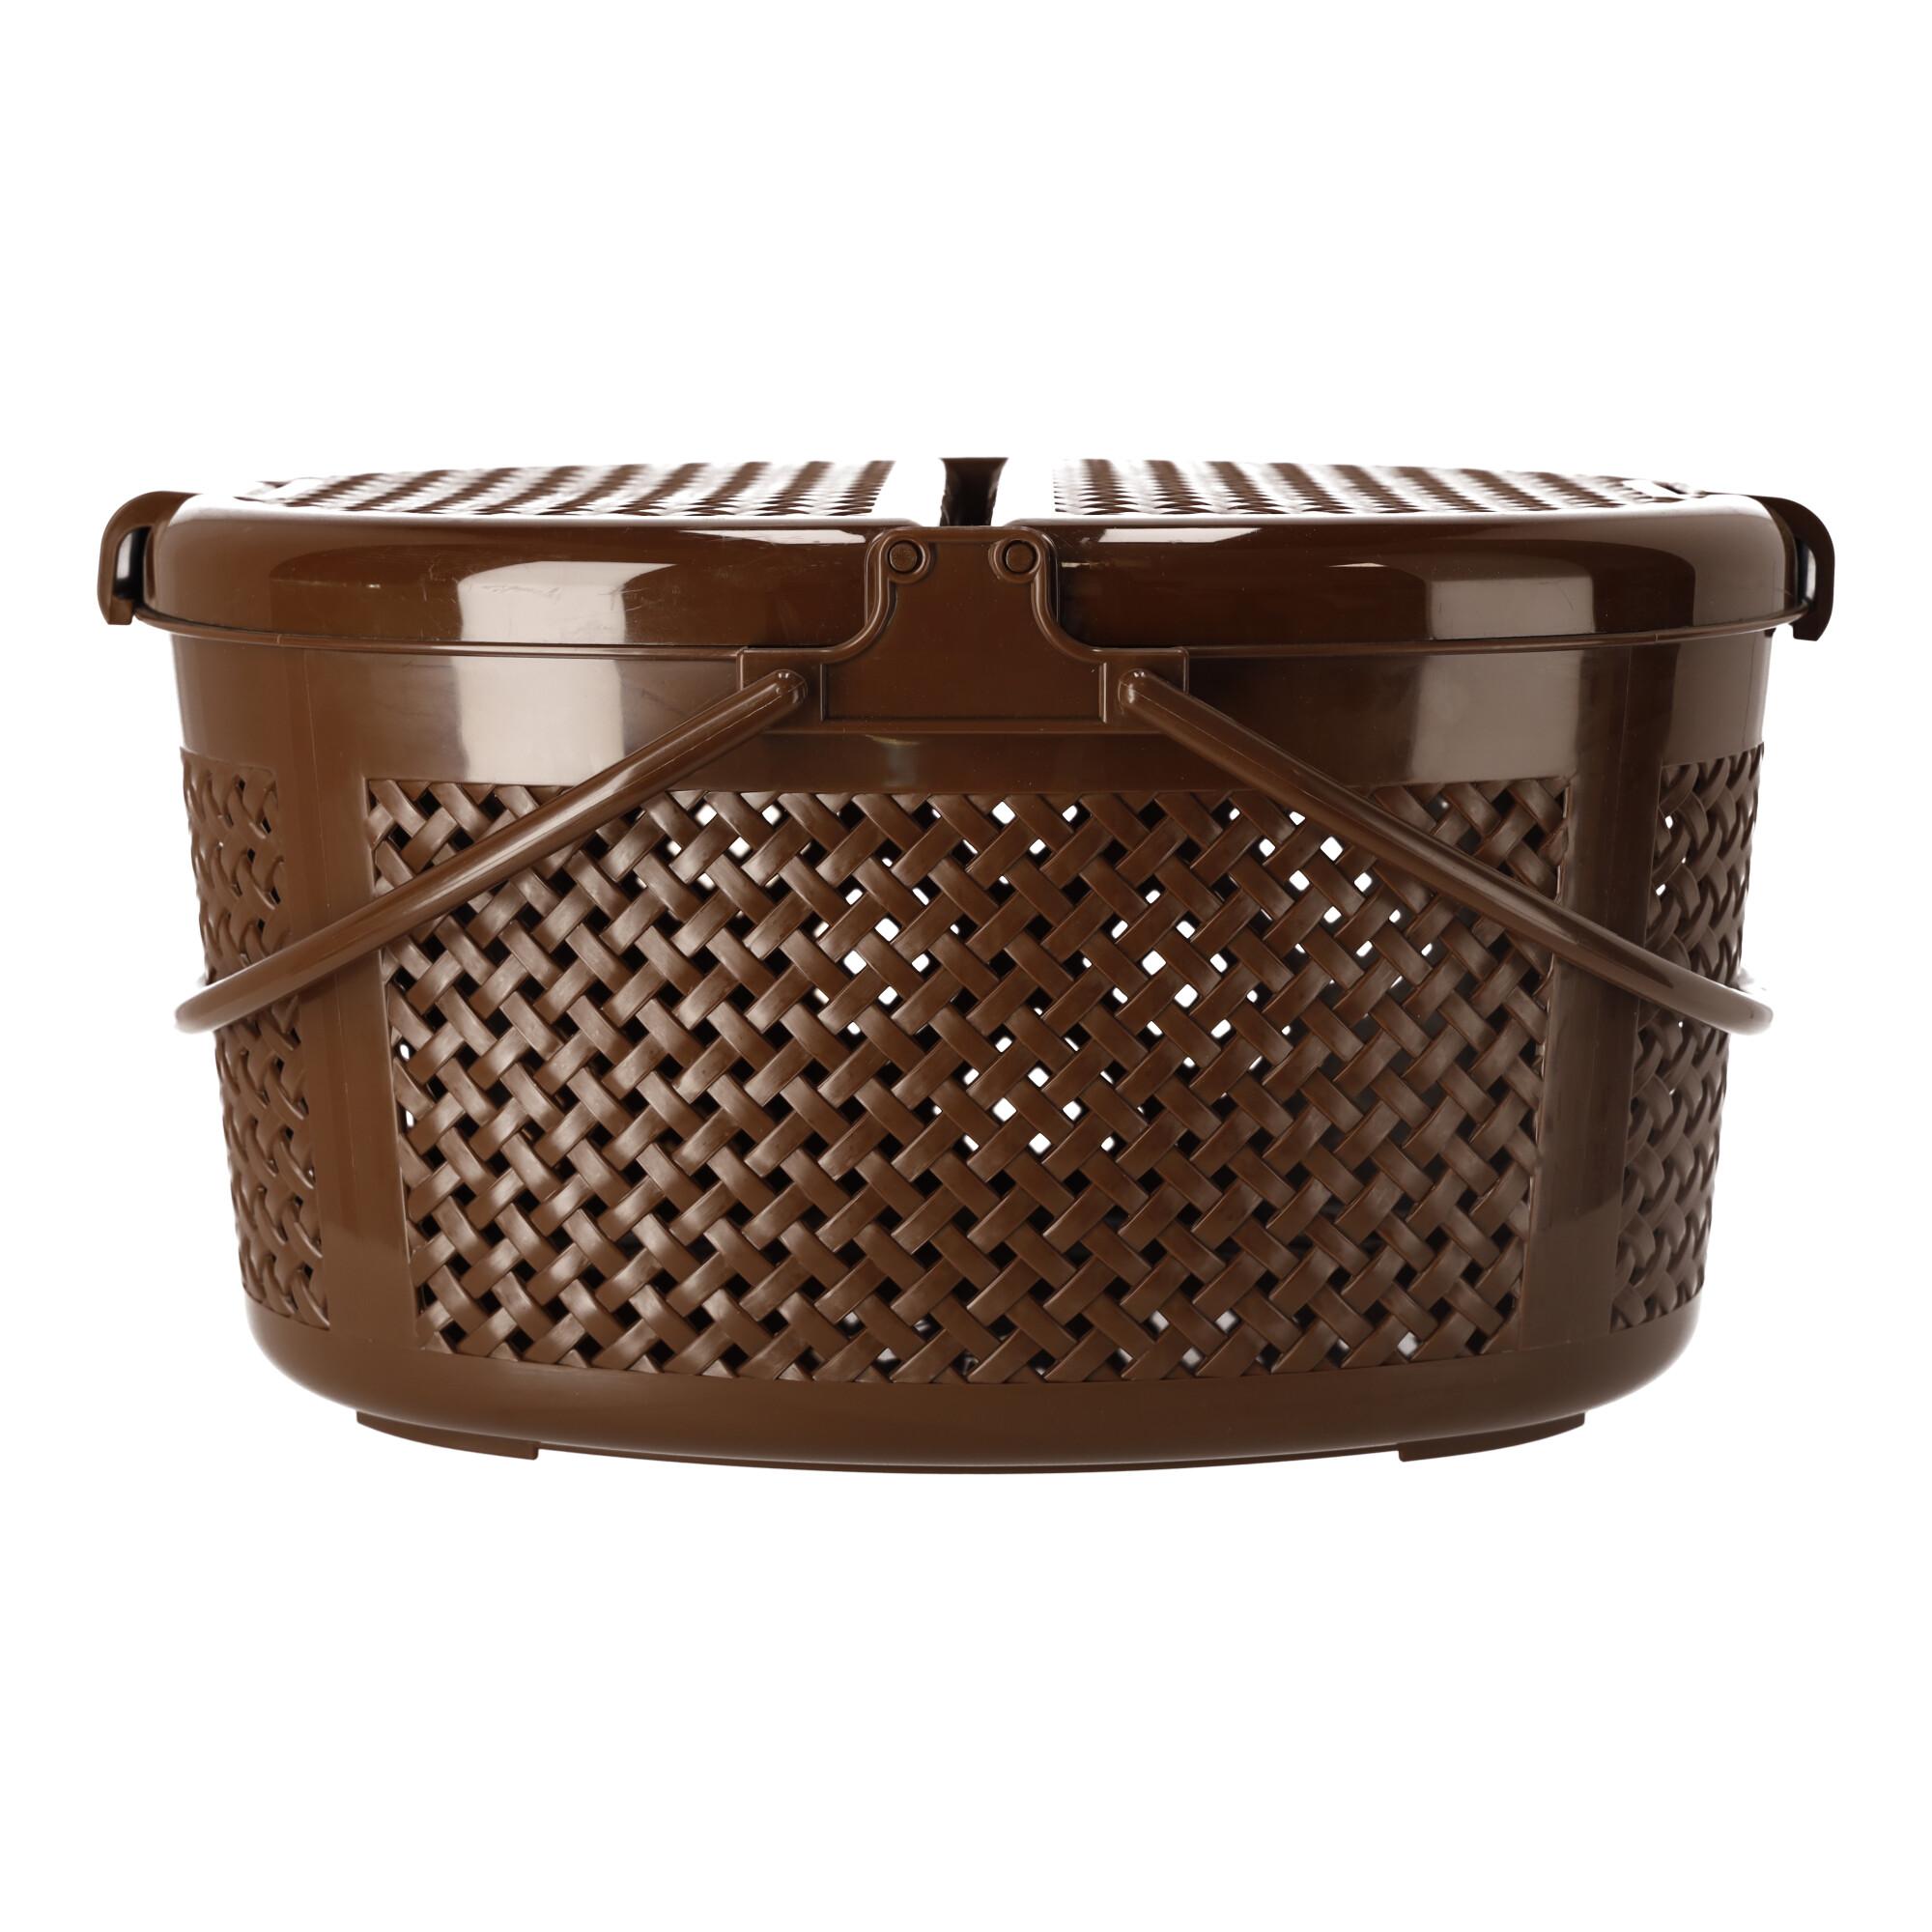 Closable oval picnic basket brown, POLISH PRODUCT